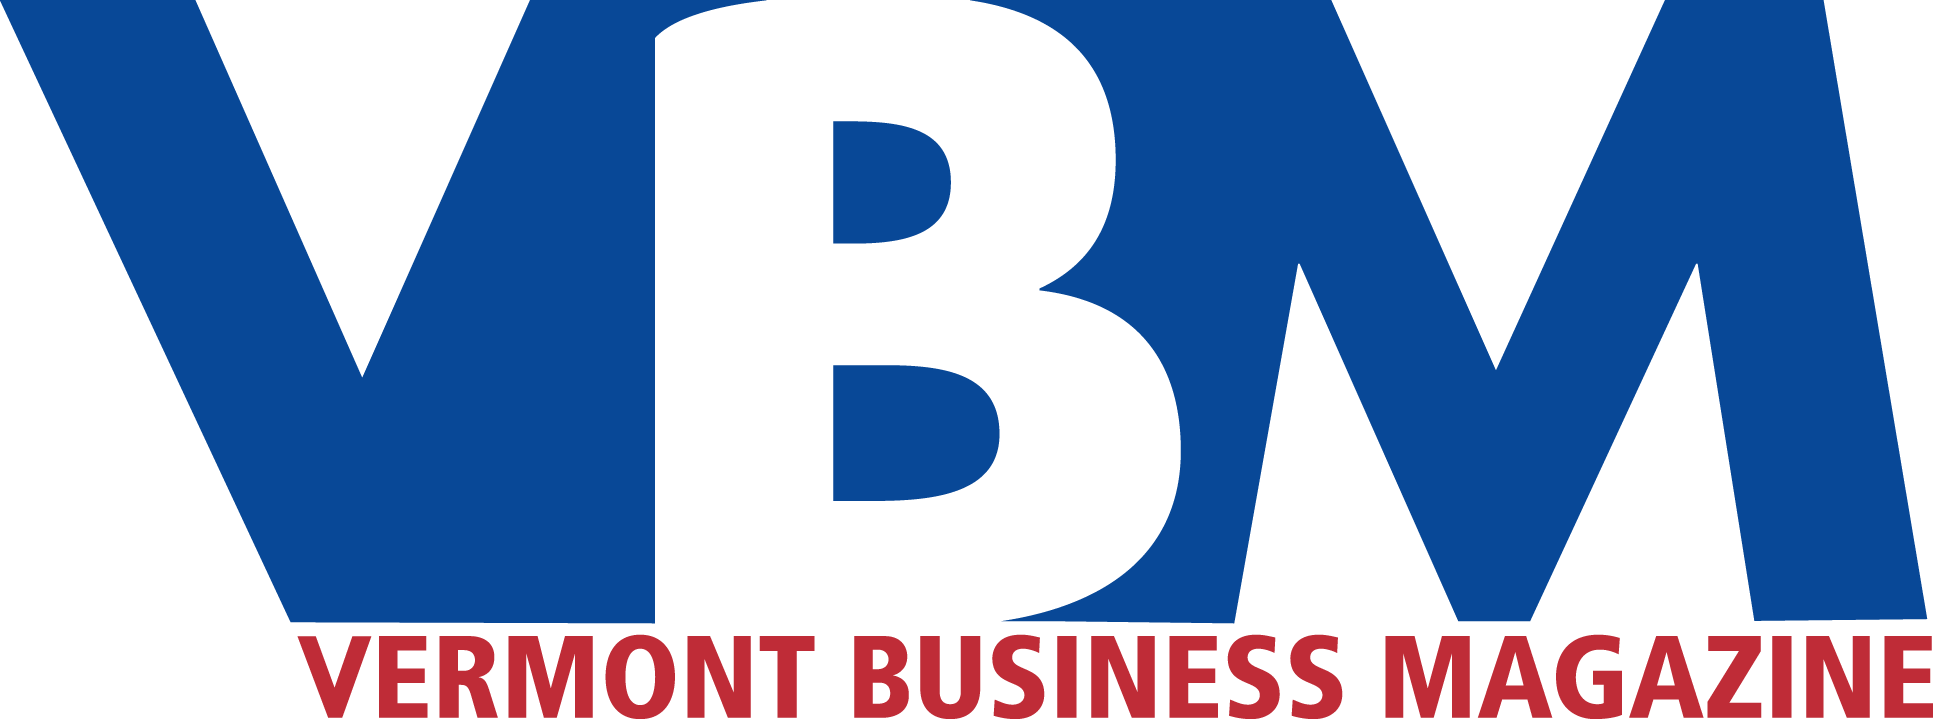 vermont business magazine vbm logo